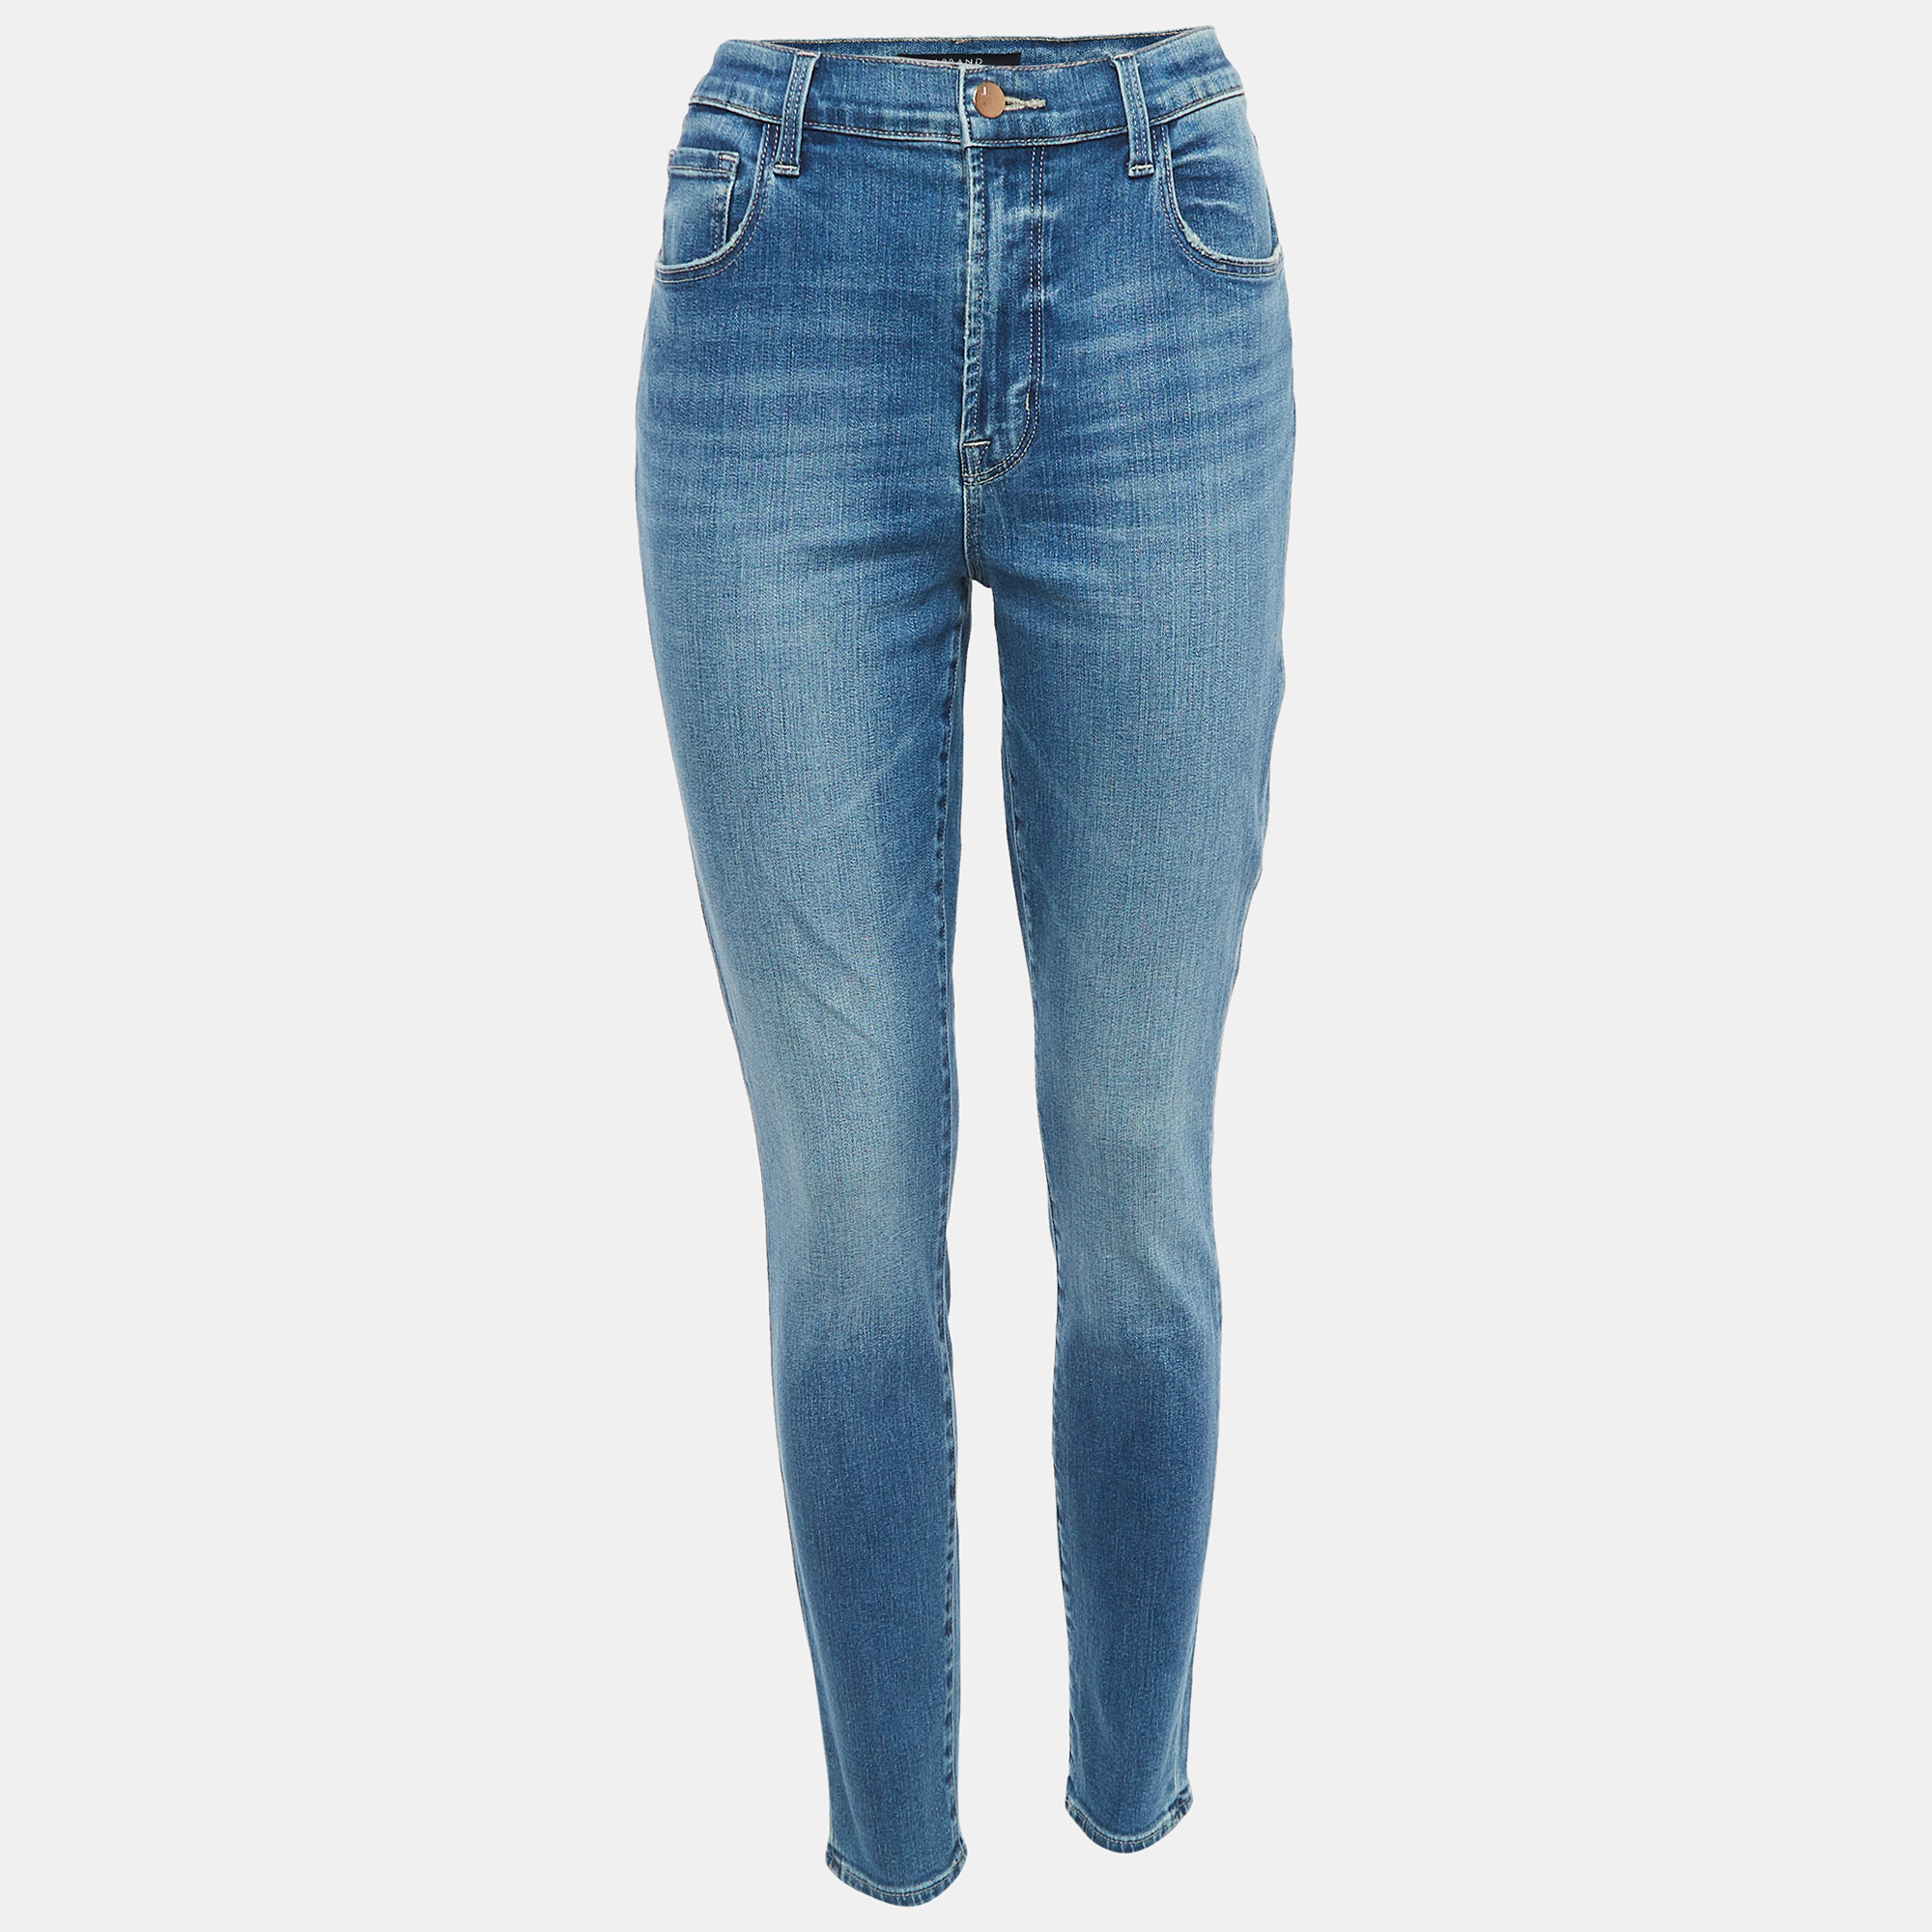 J Brand Blue Washed Denim Skinny Jeans M Waist 29